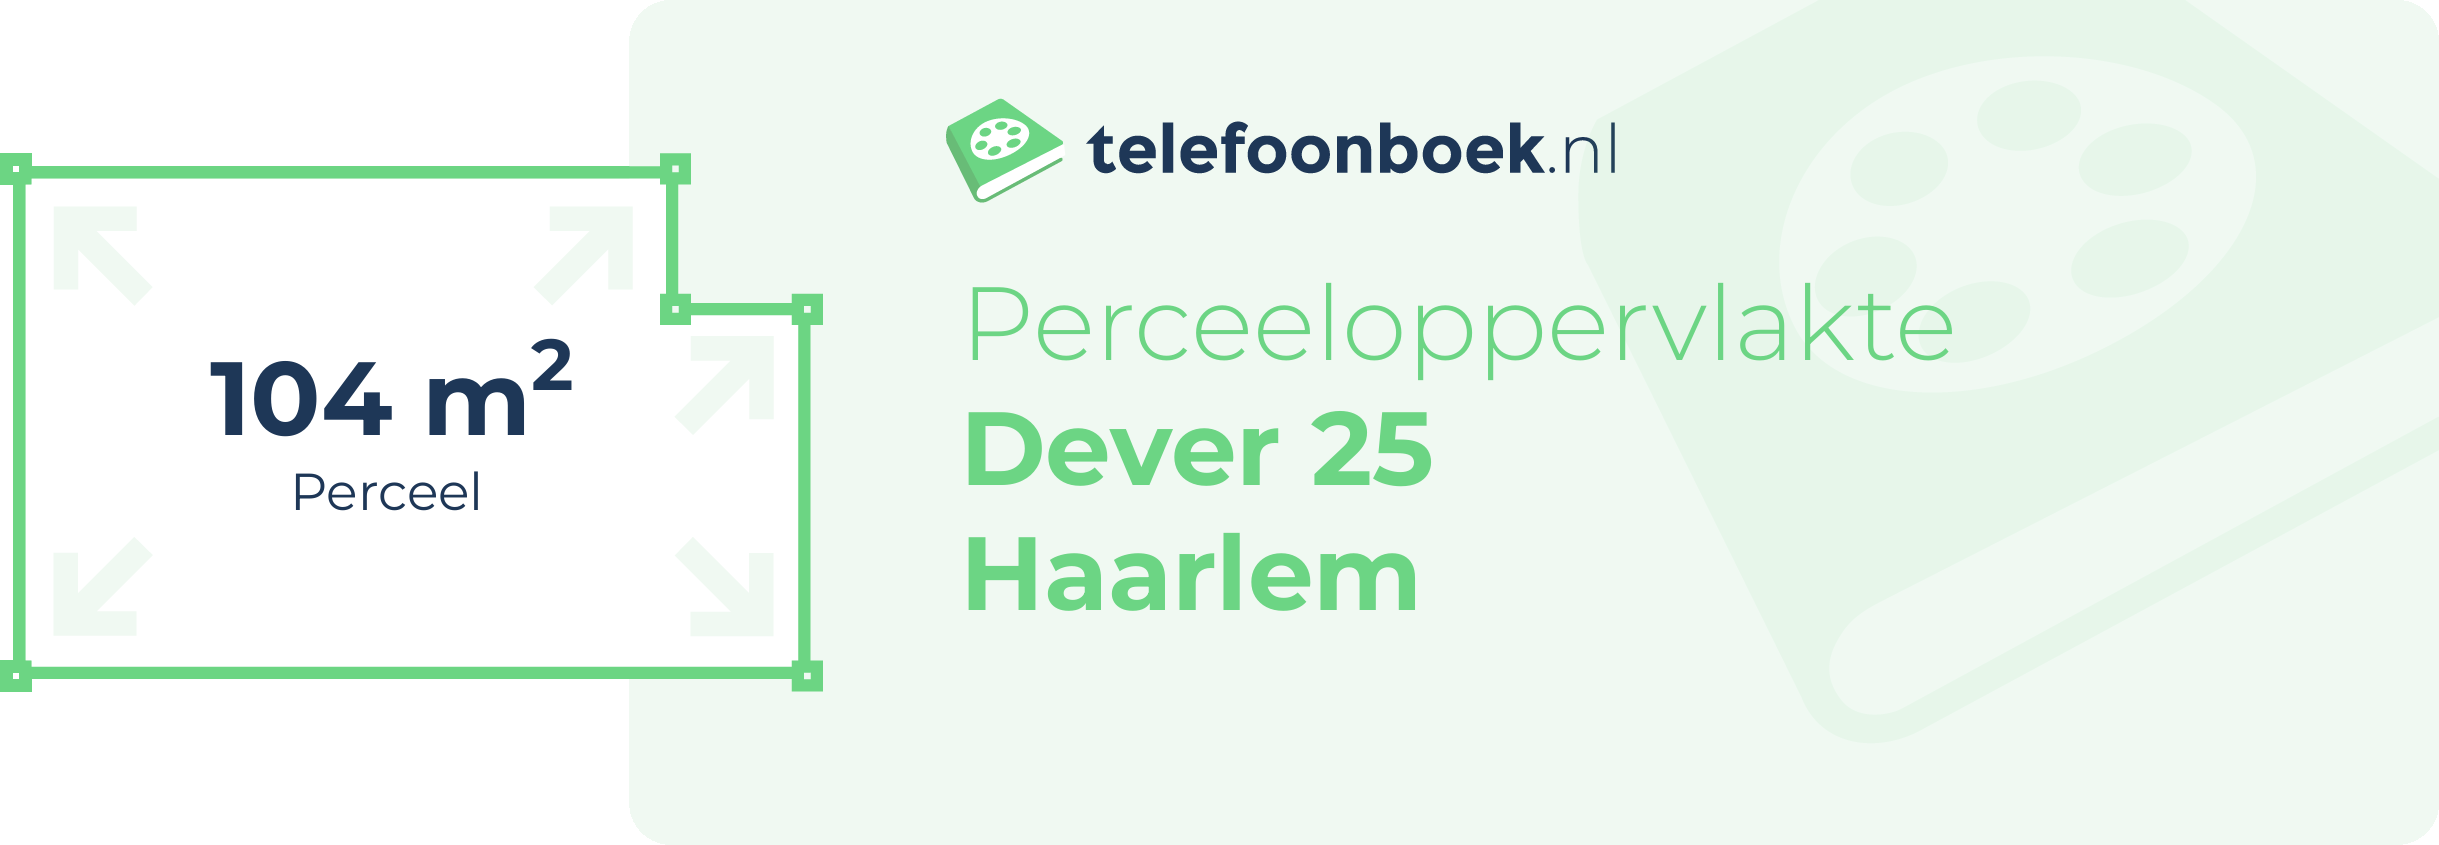 Perceeloppervlakte Dever 25 Haarlem